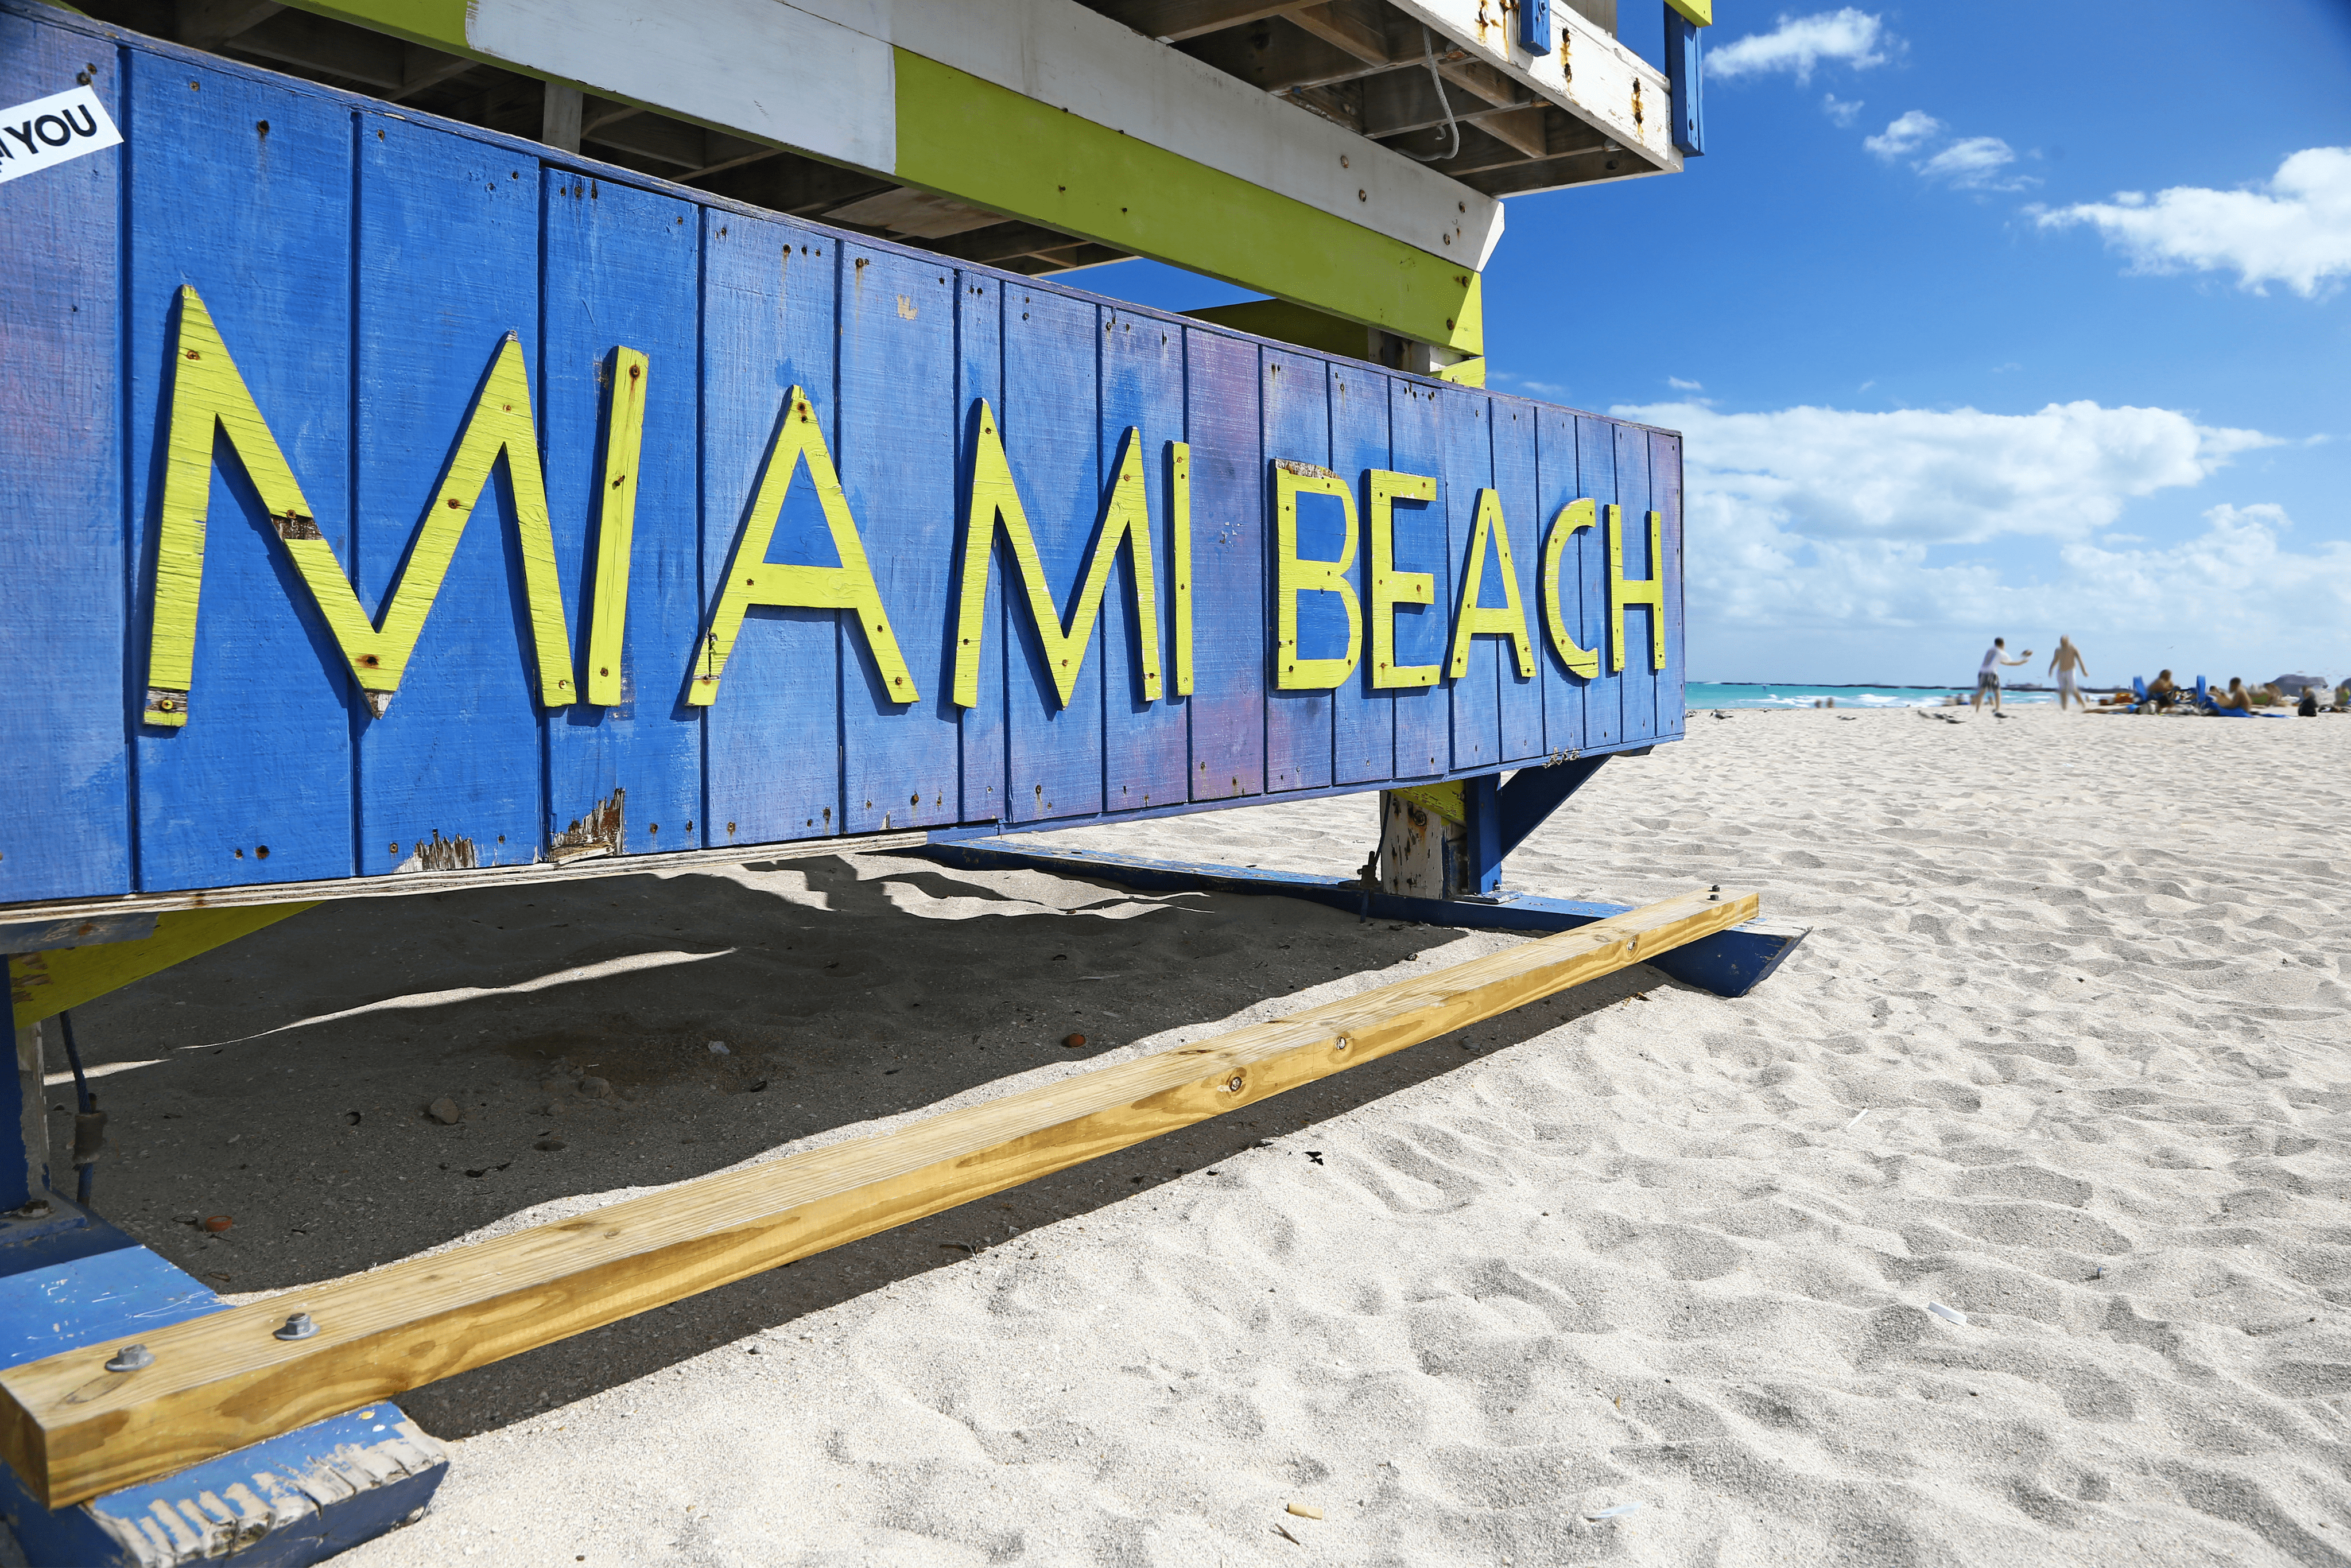 Miami Beach lifeguard sign color and green